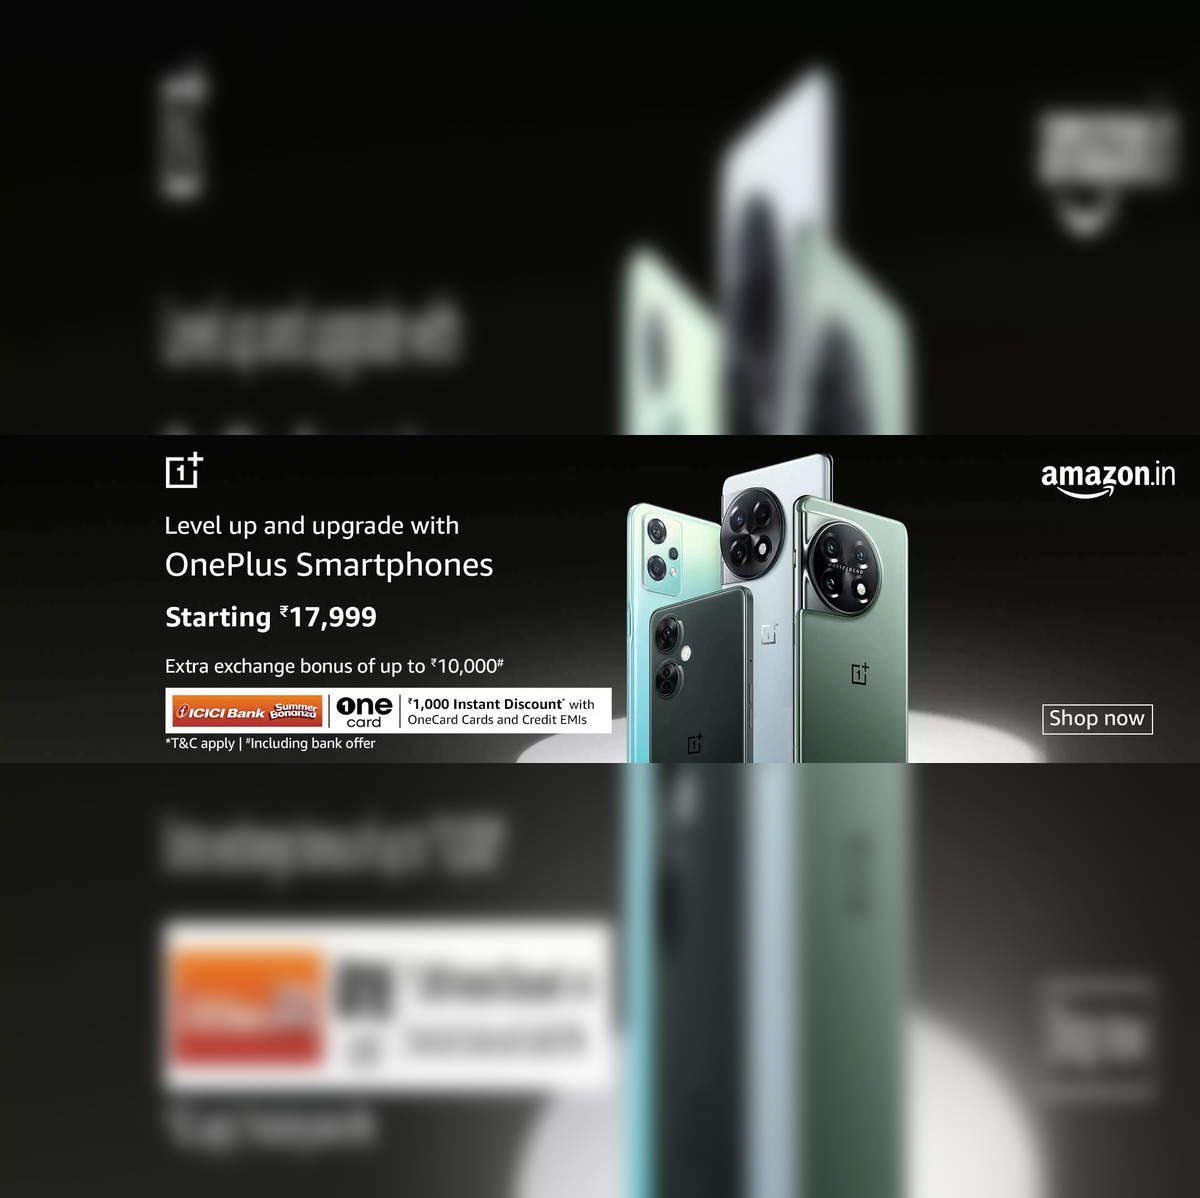 OnePlus 11 5G Marble Odyssey vs OnePlus Nord 3 5G (16GB RAM + 256GB)